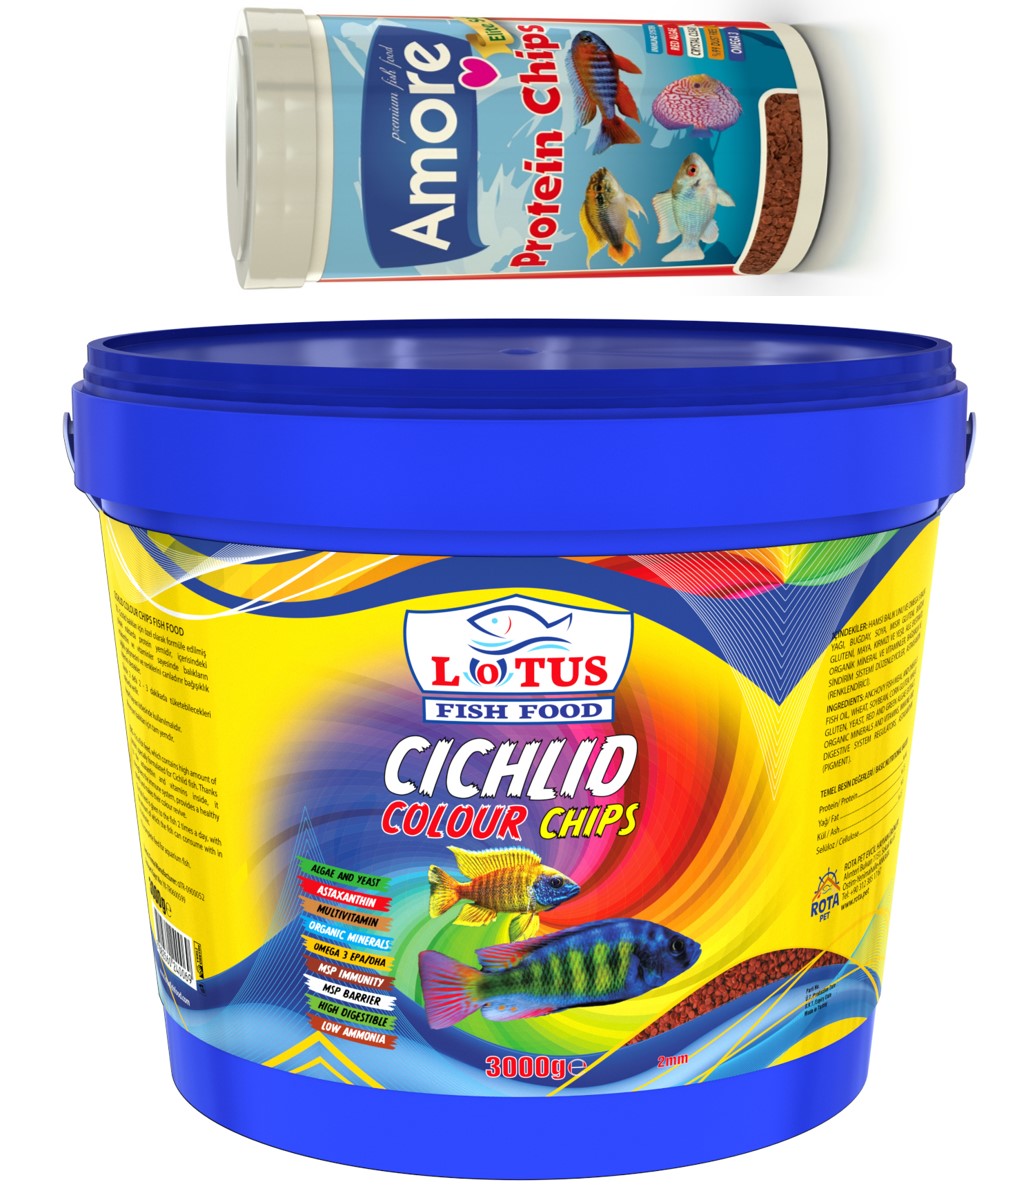 Lotus Cichlid Colour Chips 3 Kg Kova Ve Amore Pro Protein Chips 250 Ml Malawi Renklendirme Balık Yemi